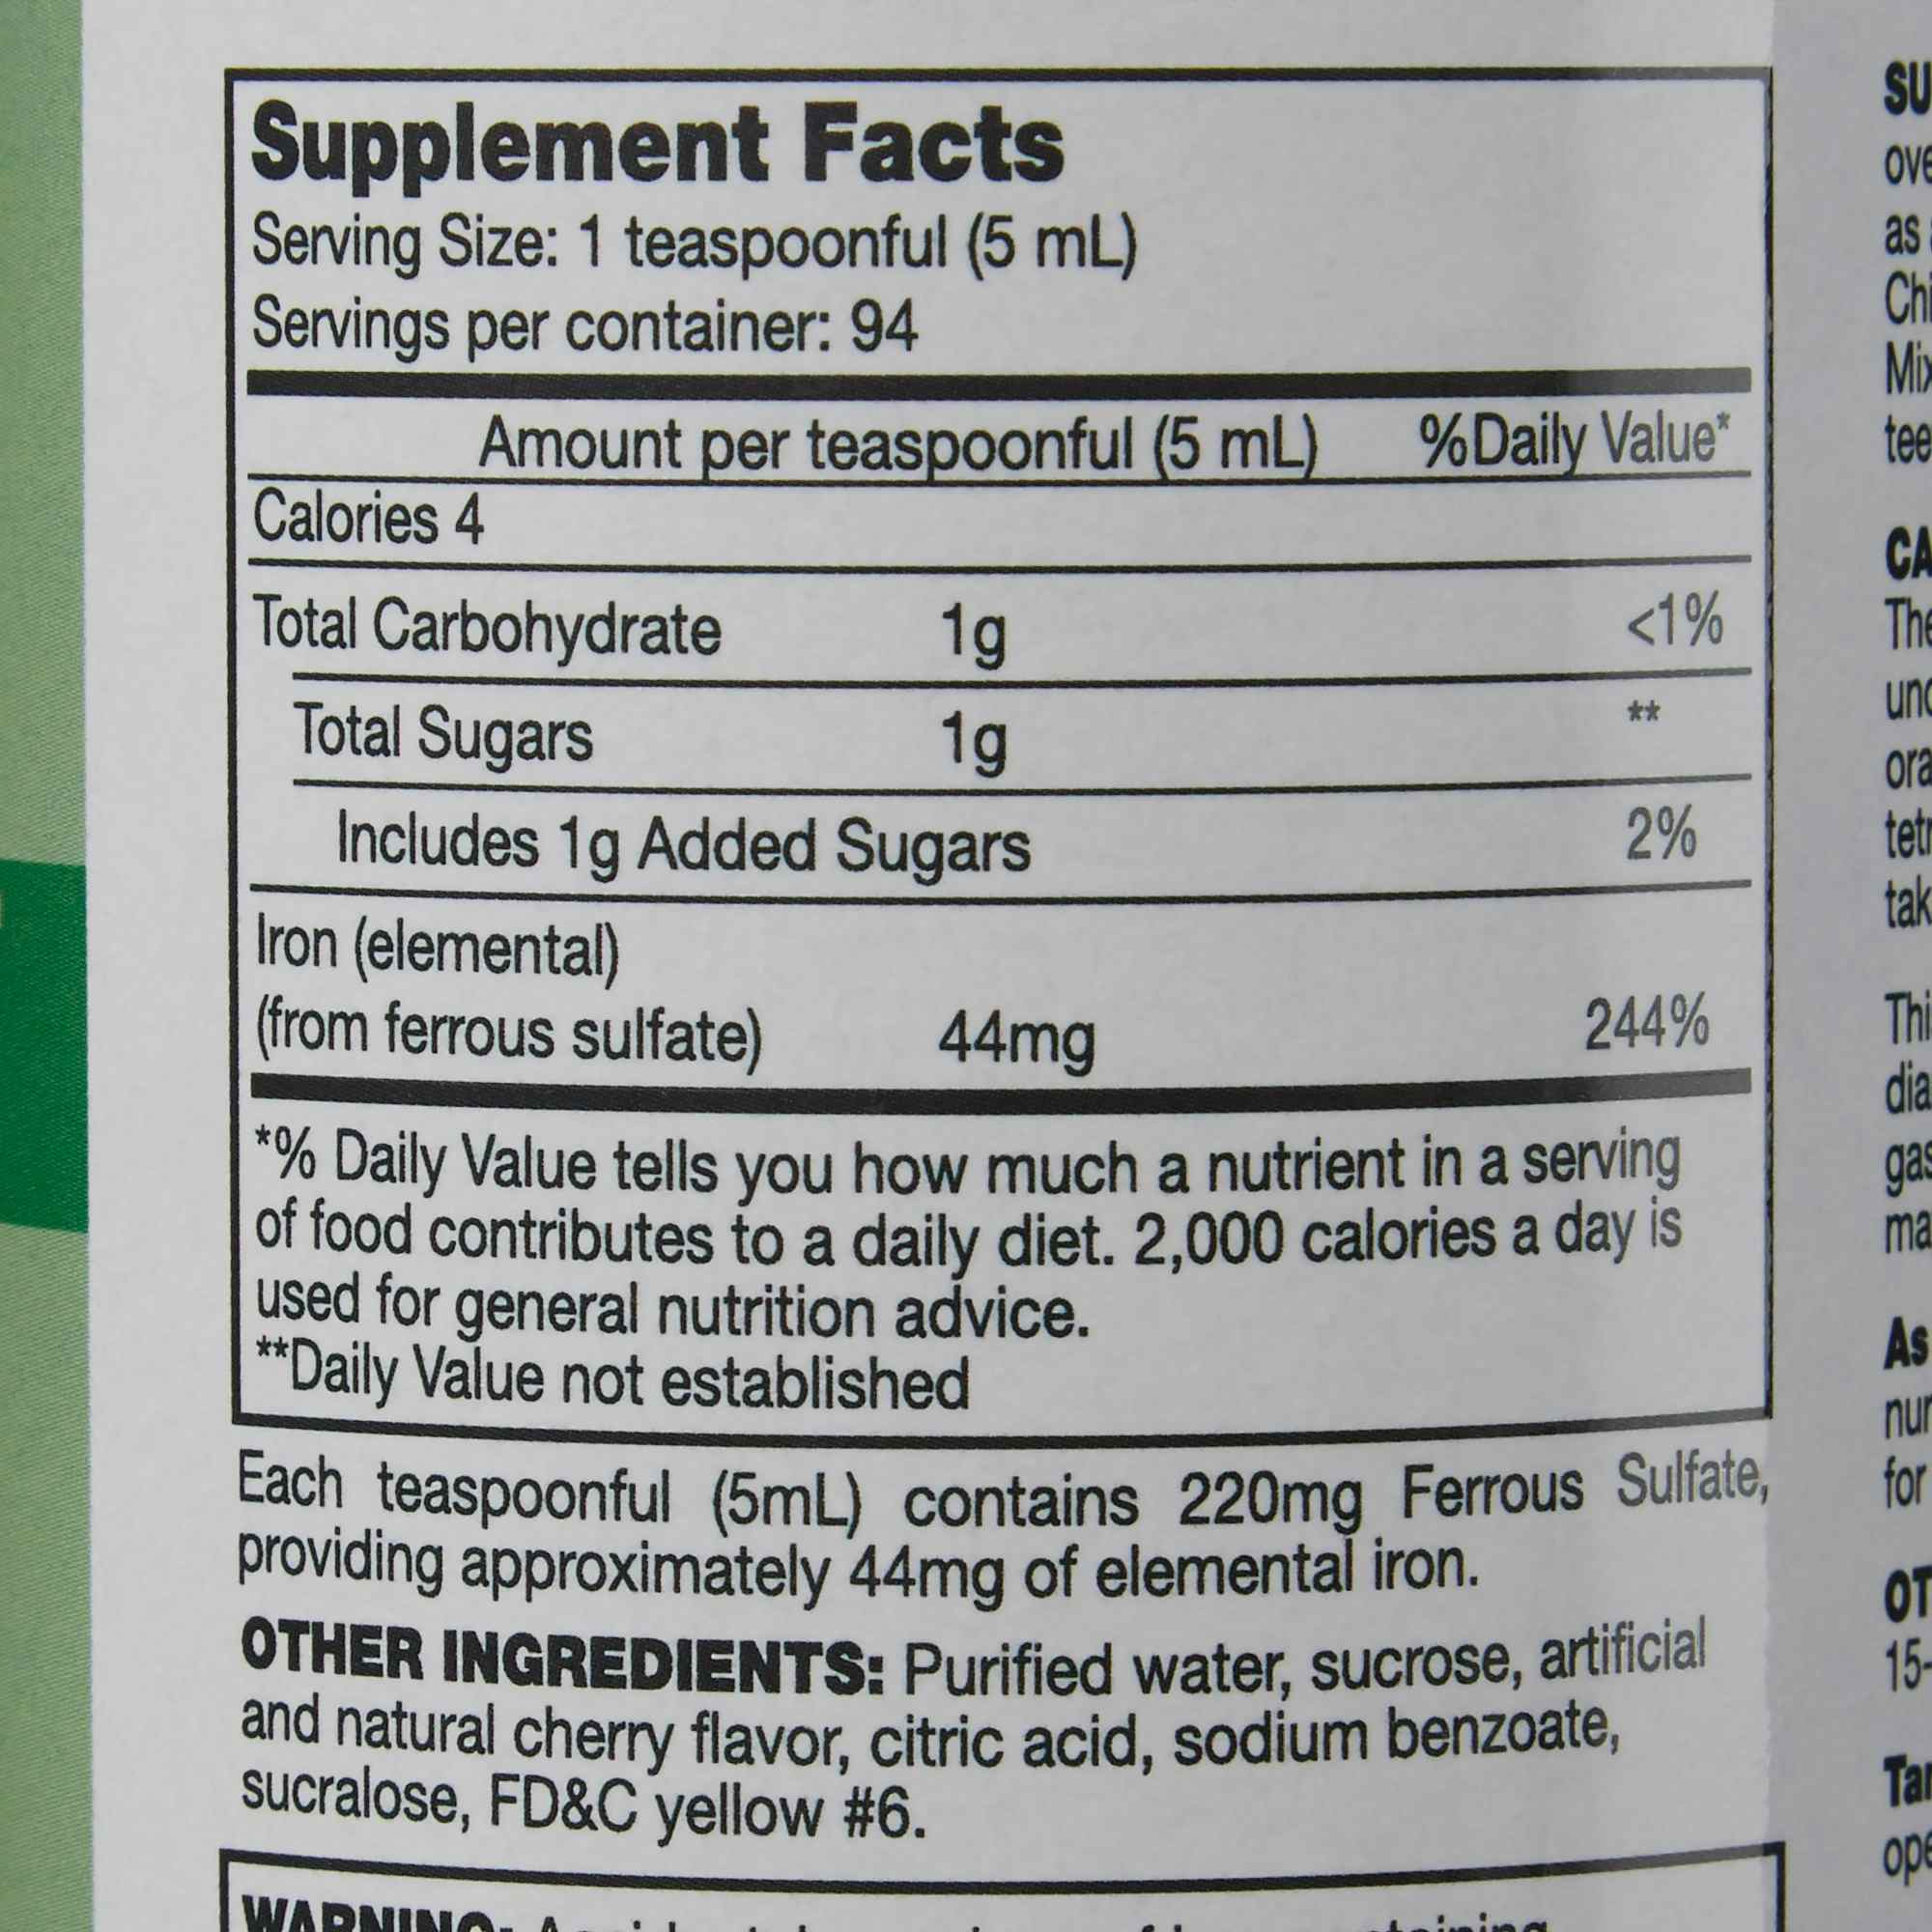 Geri-Care Iron Supplement Liquid, 220 mg/5 mL, 16 oz., Q701-16-GCP, 1 Bottle